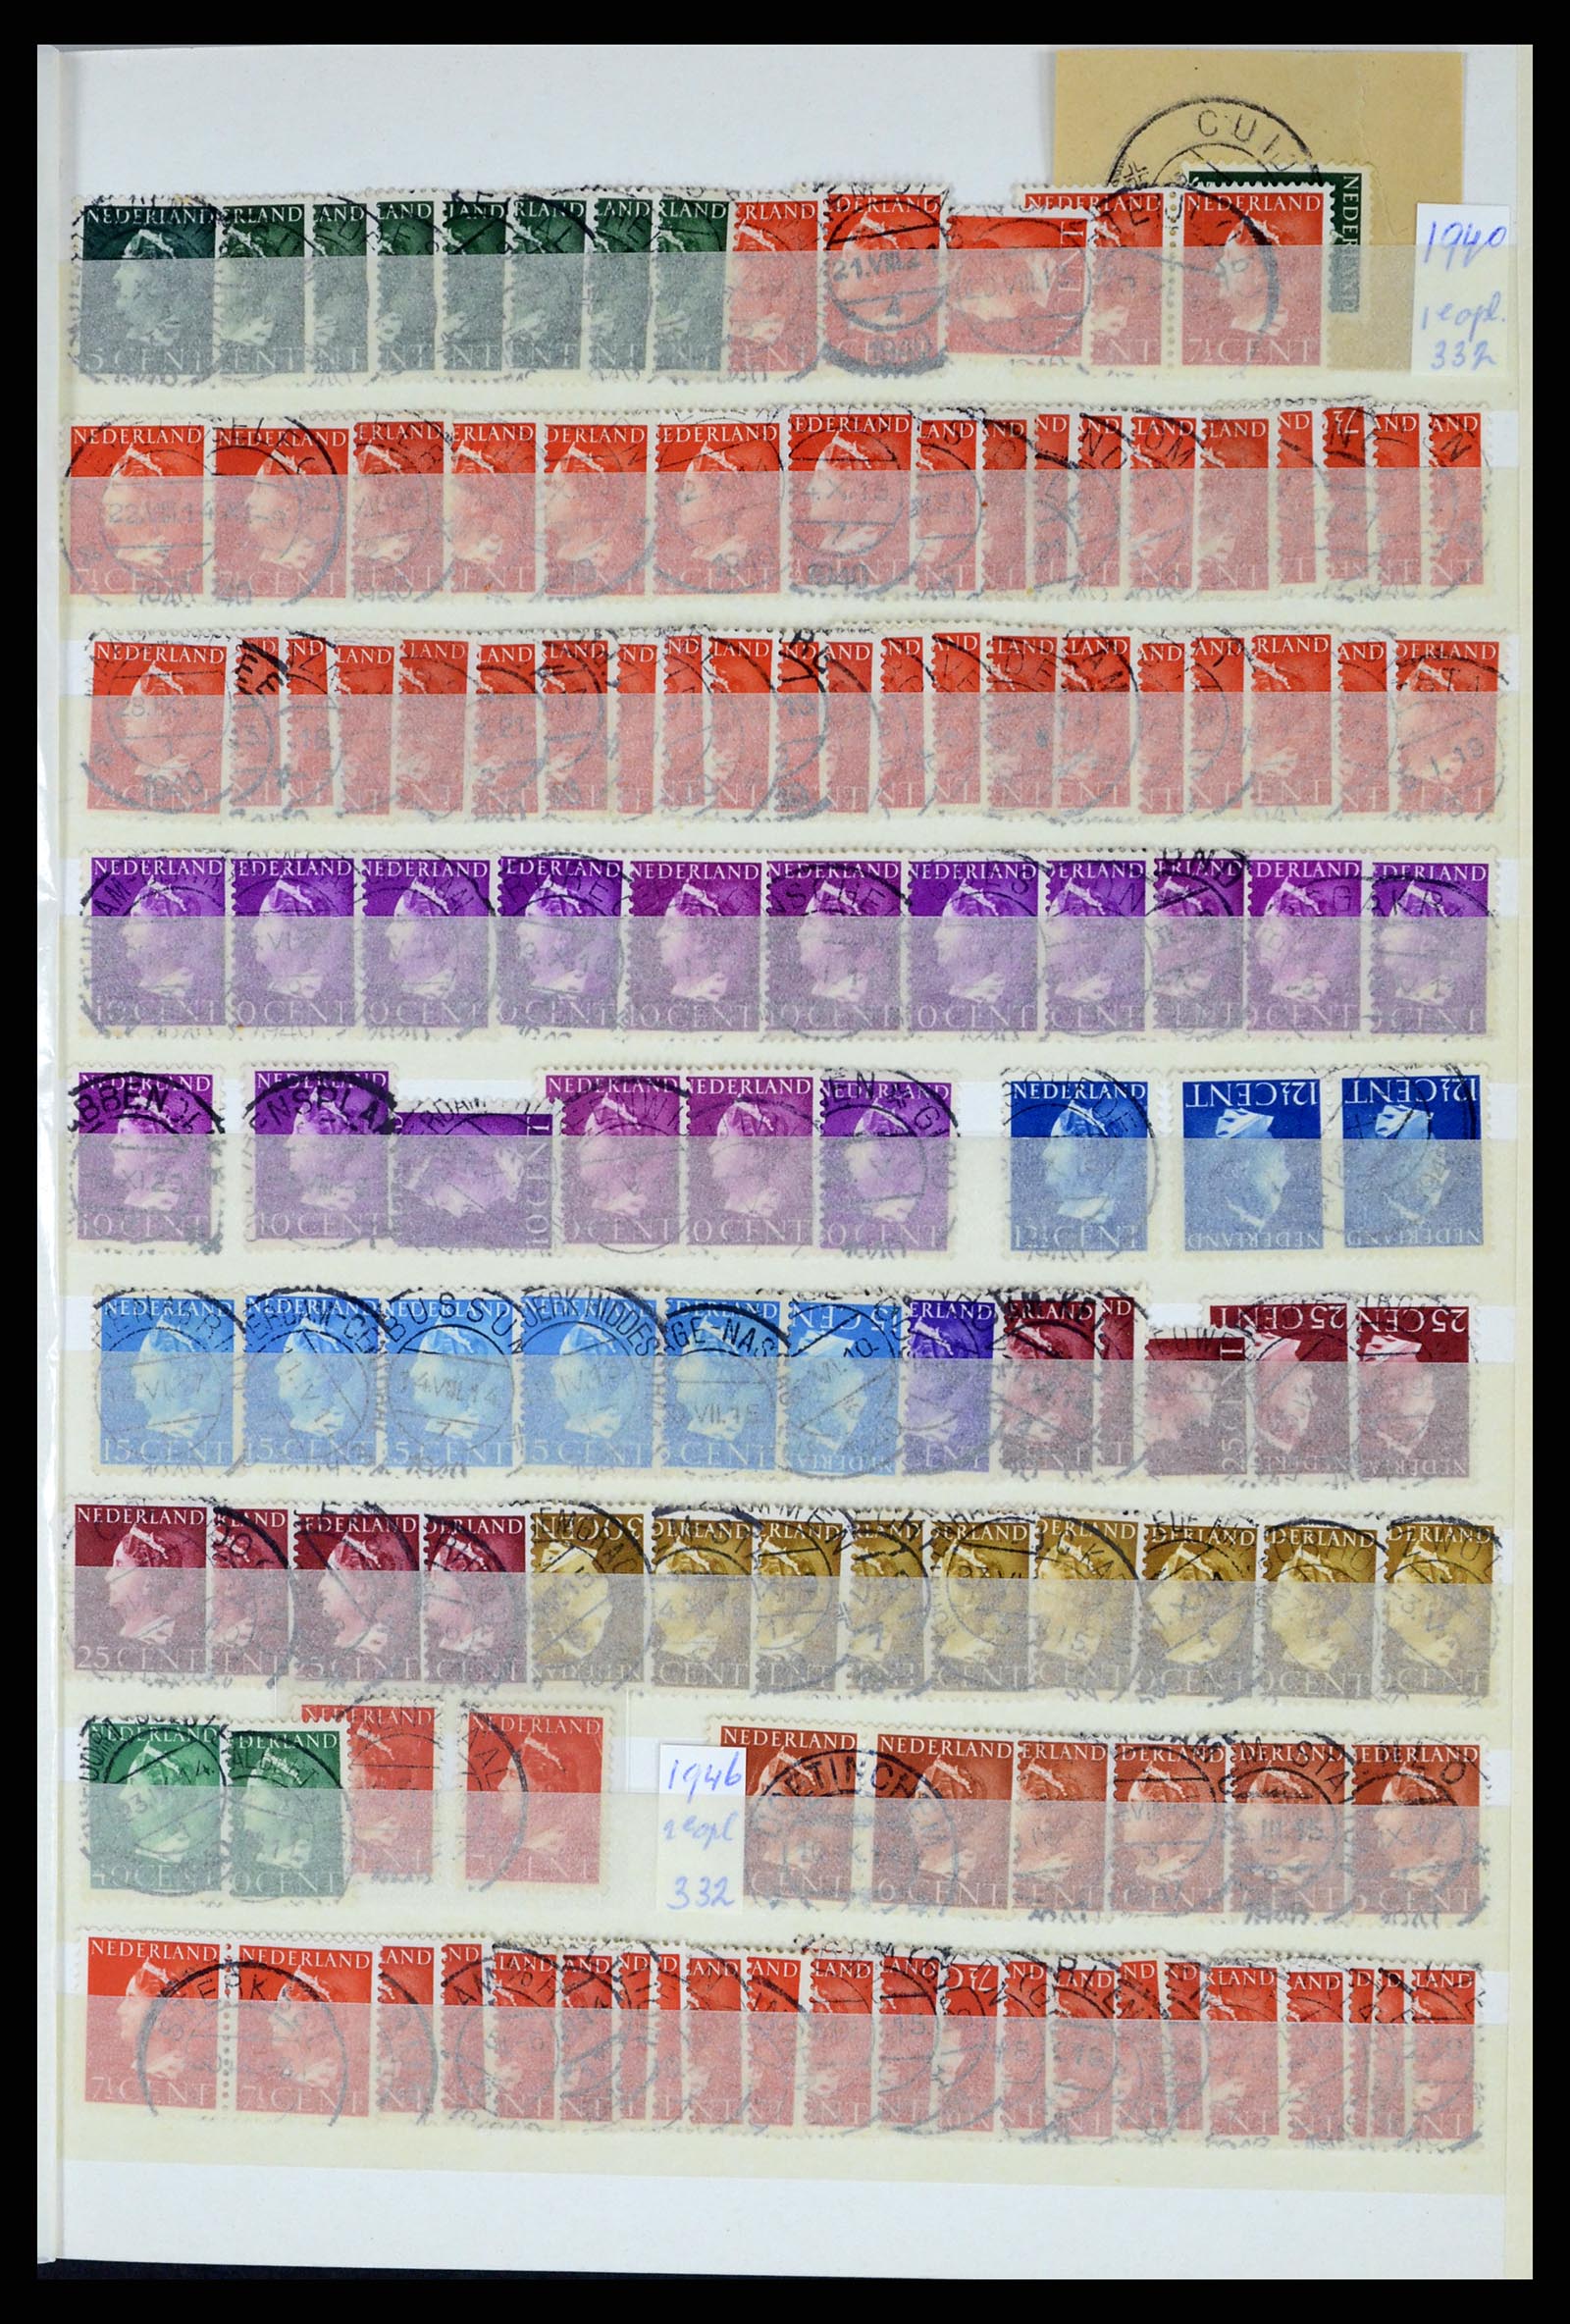 37424 027 - Stamp collection 37424 Netherlands shortbar cancels.